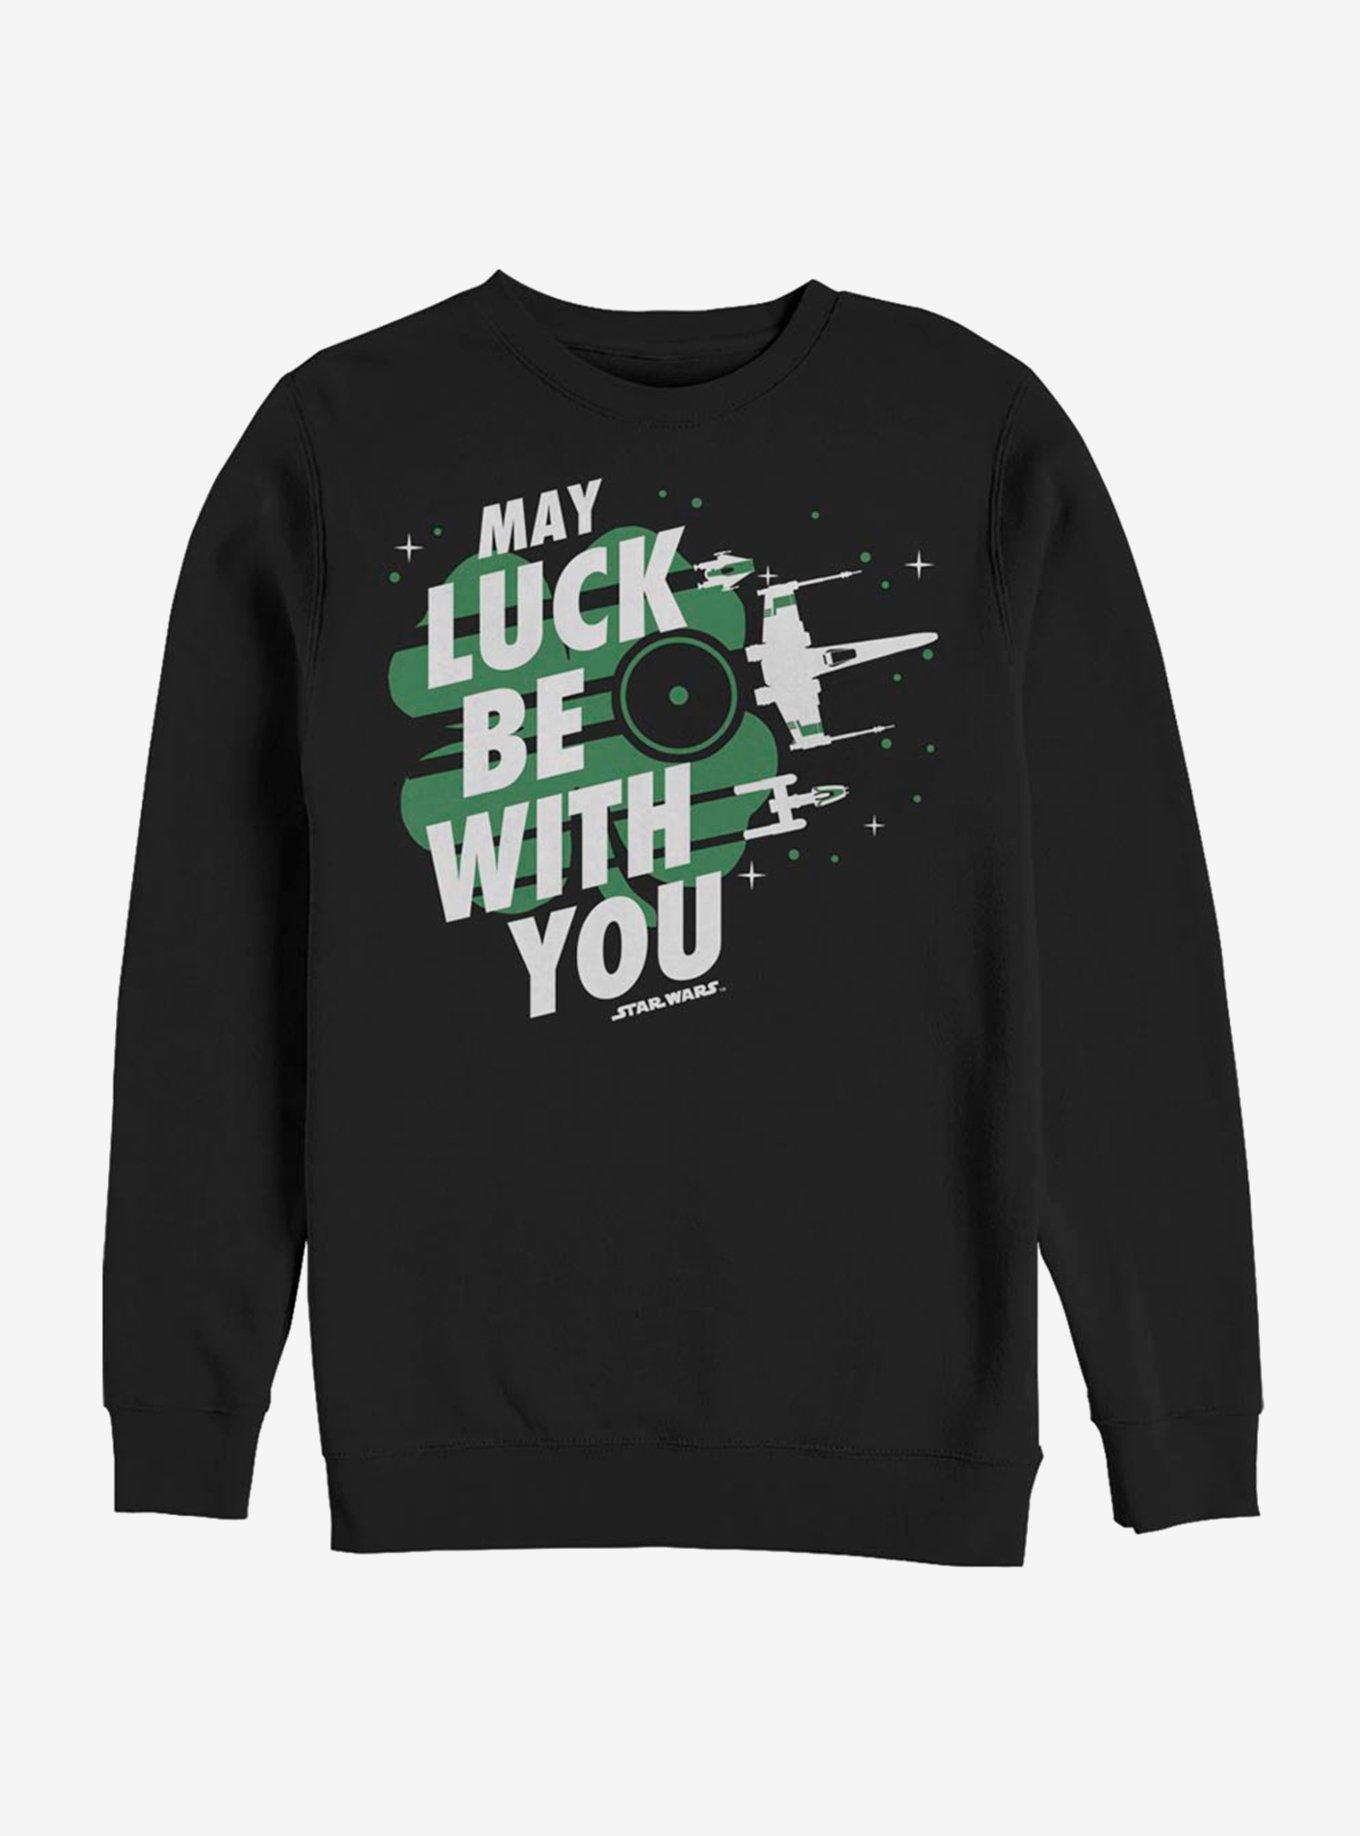 Star Wars Luck Fighters Sweatshirt, BLACK, hi-res